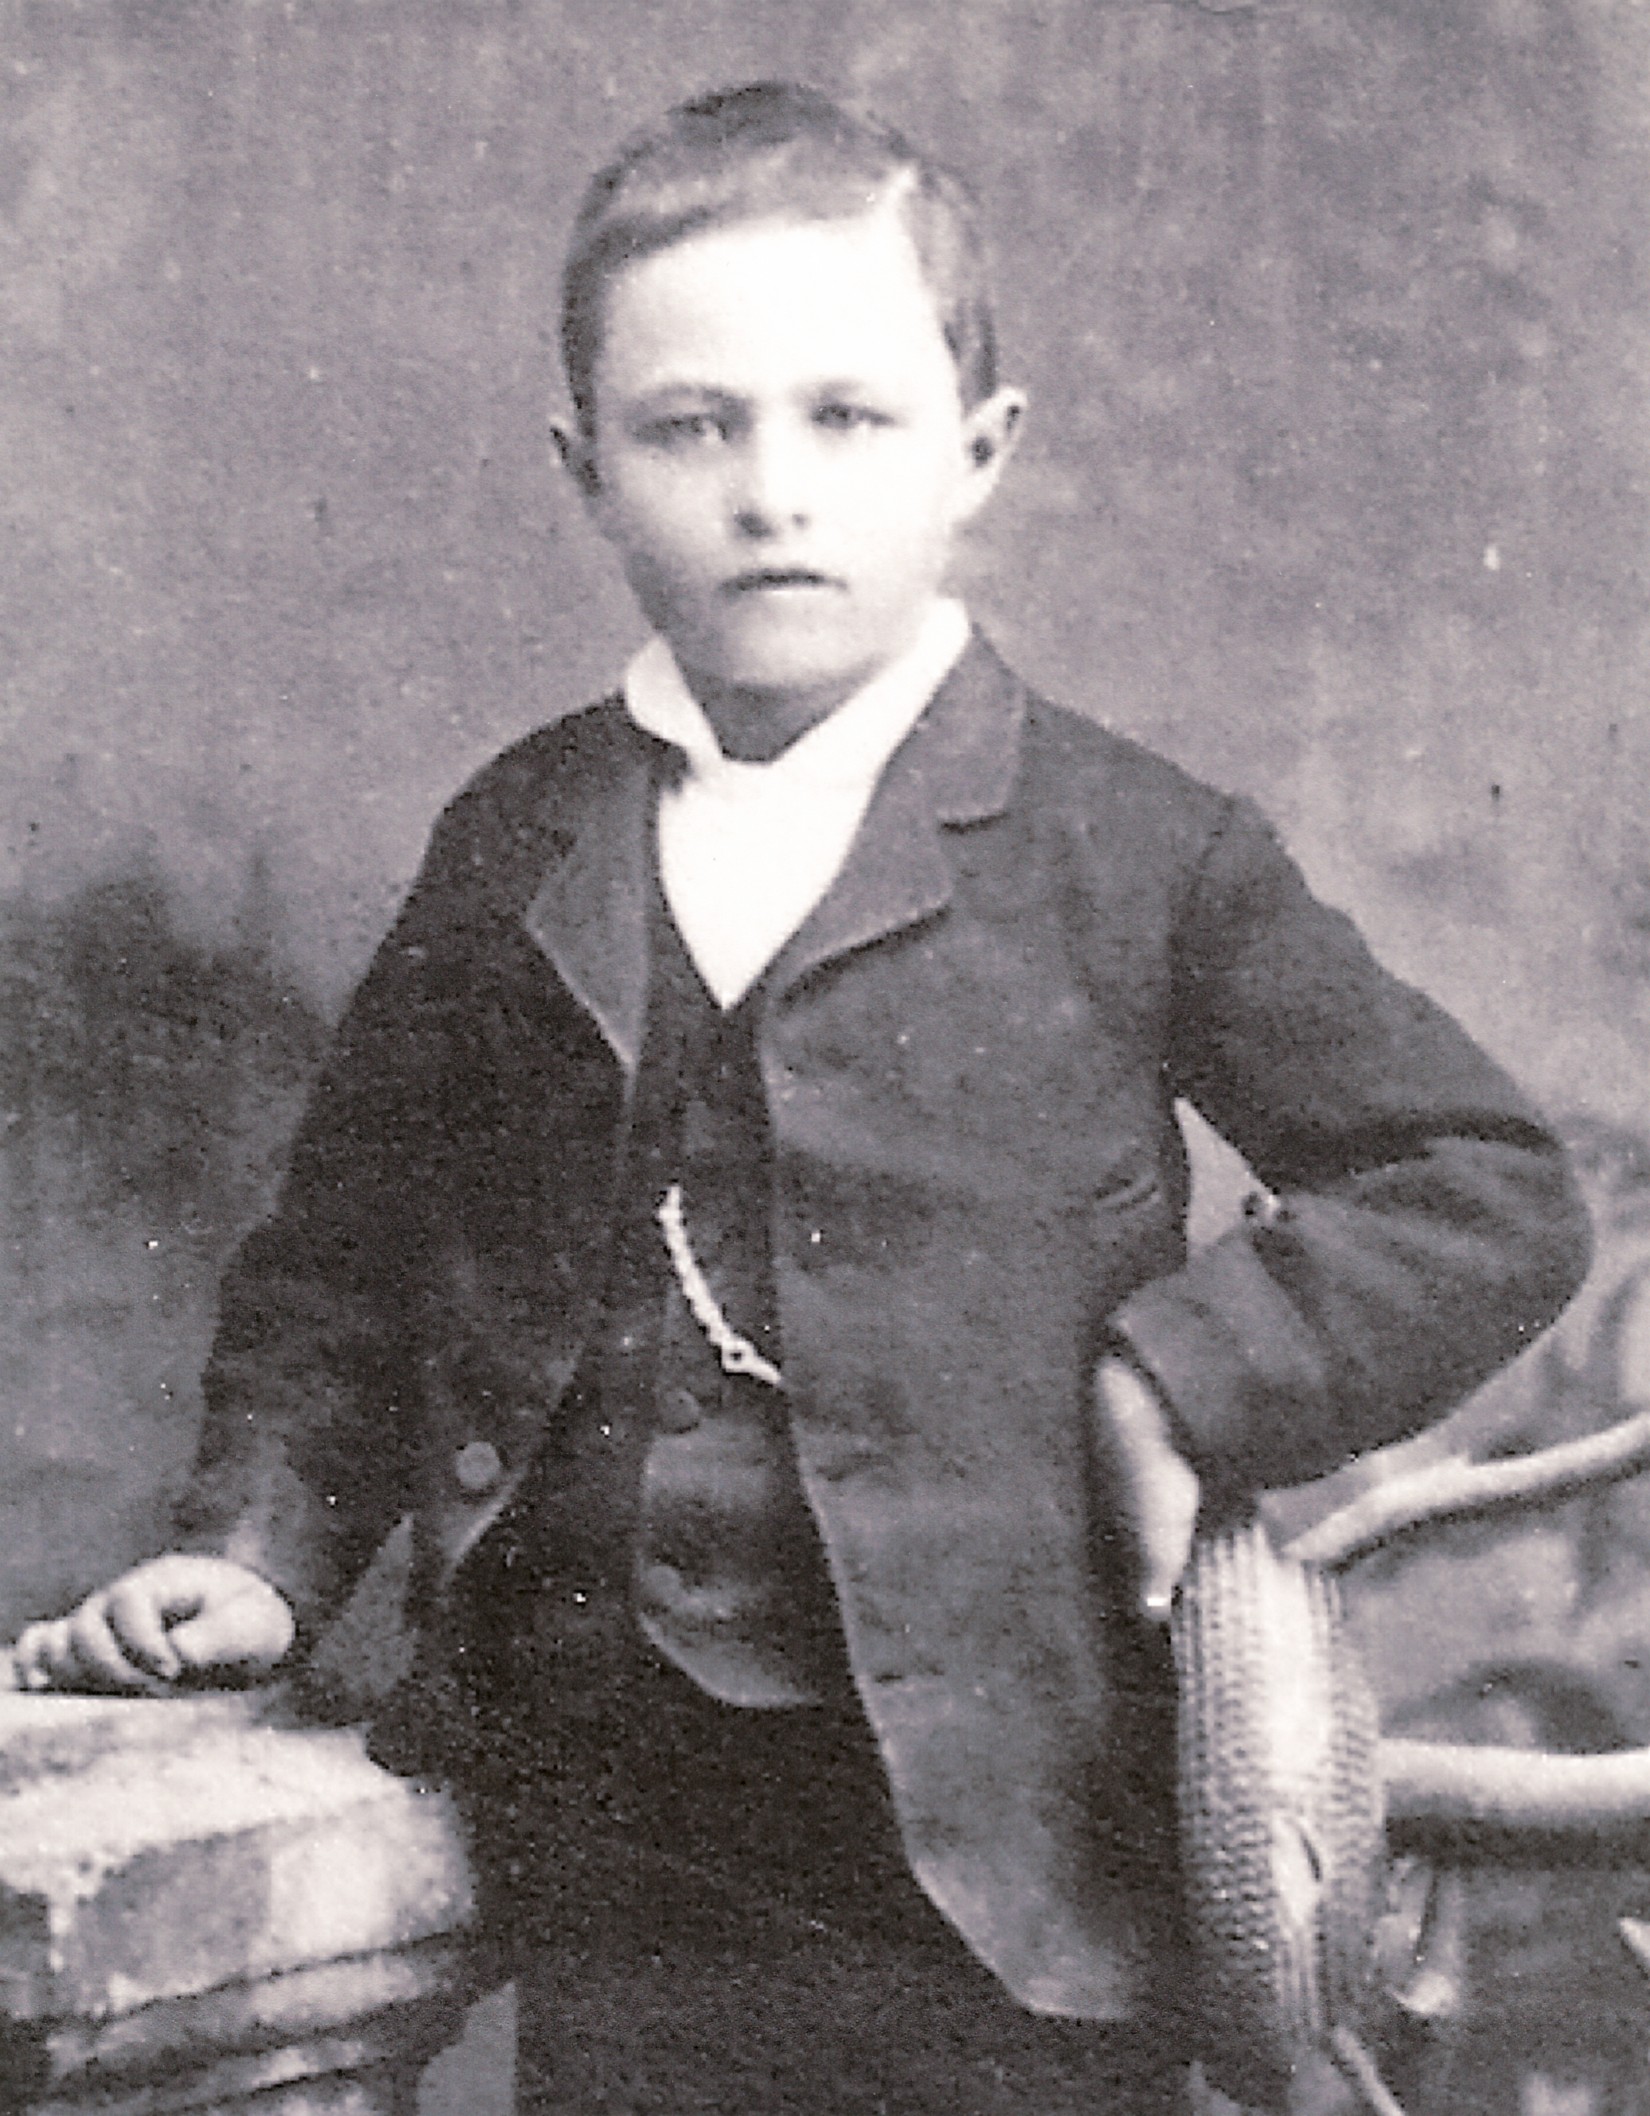 John Orson Kemple at age 9